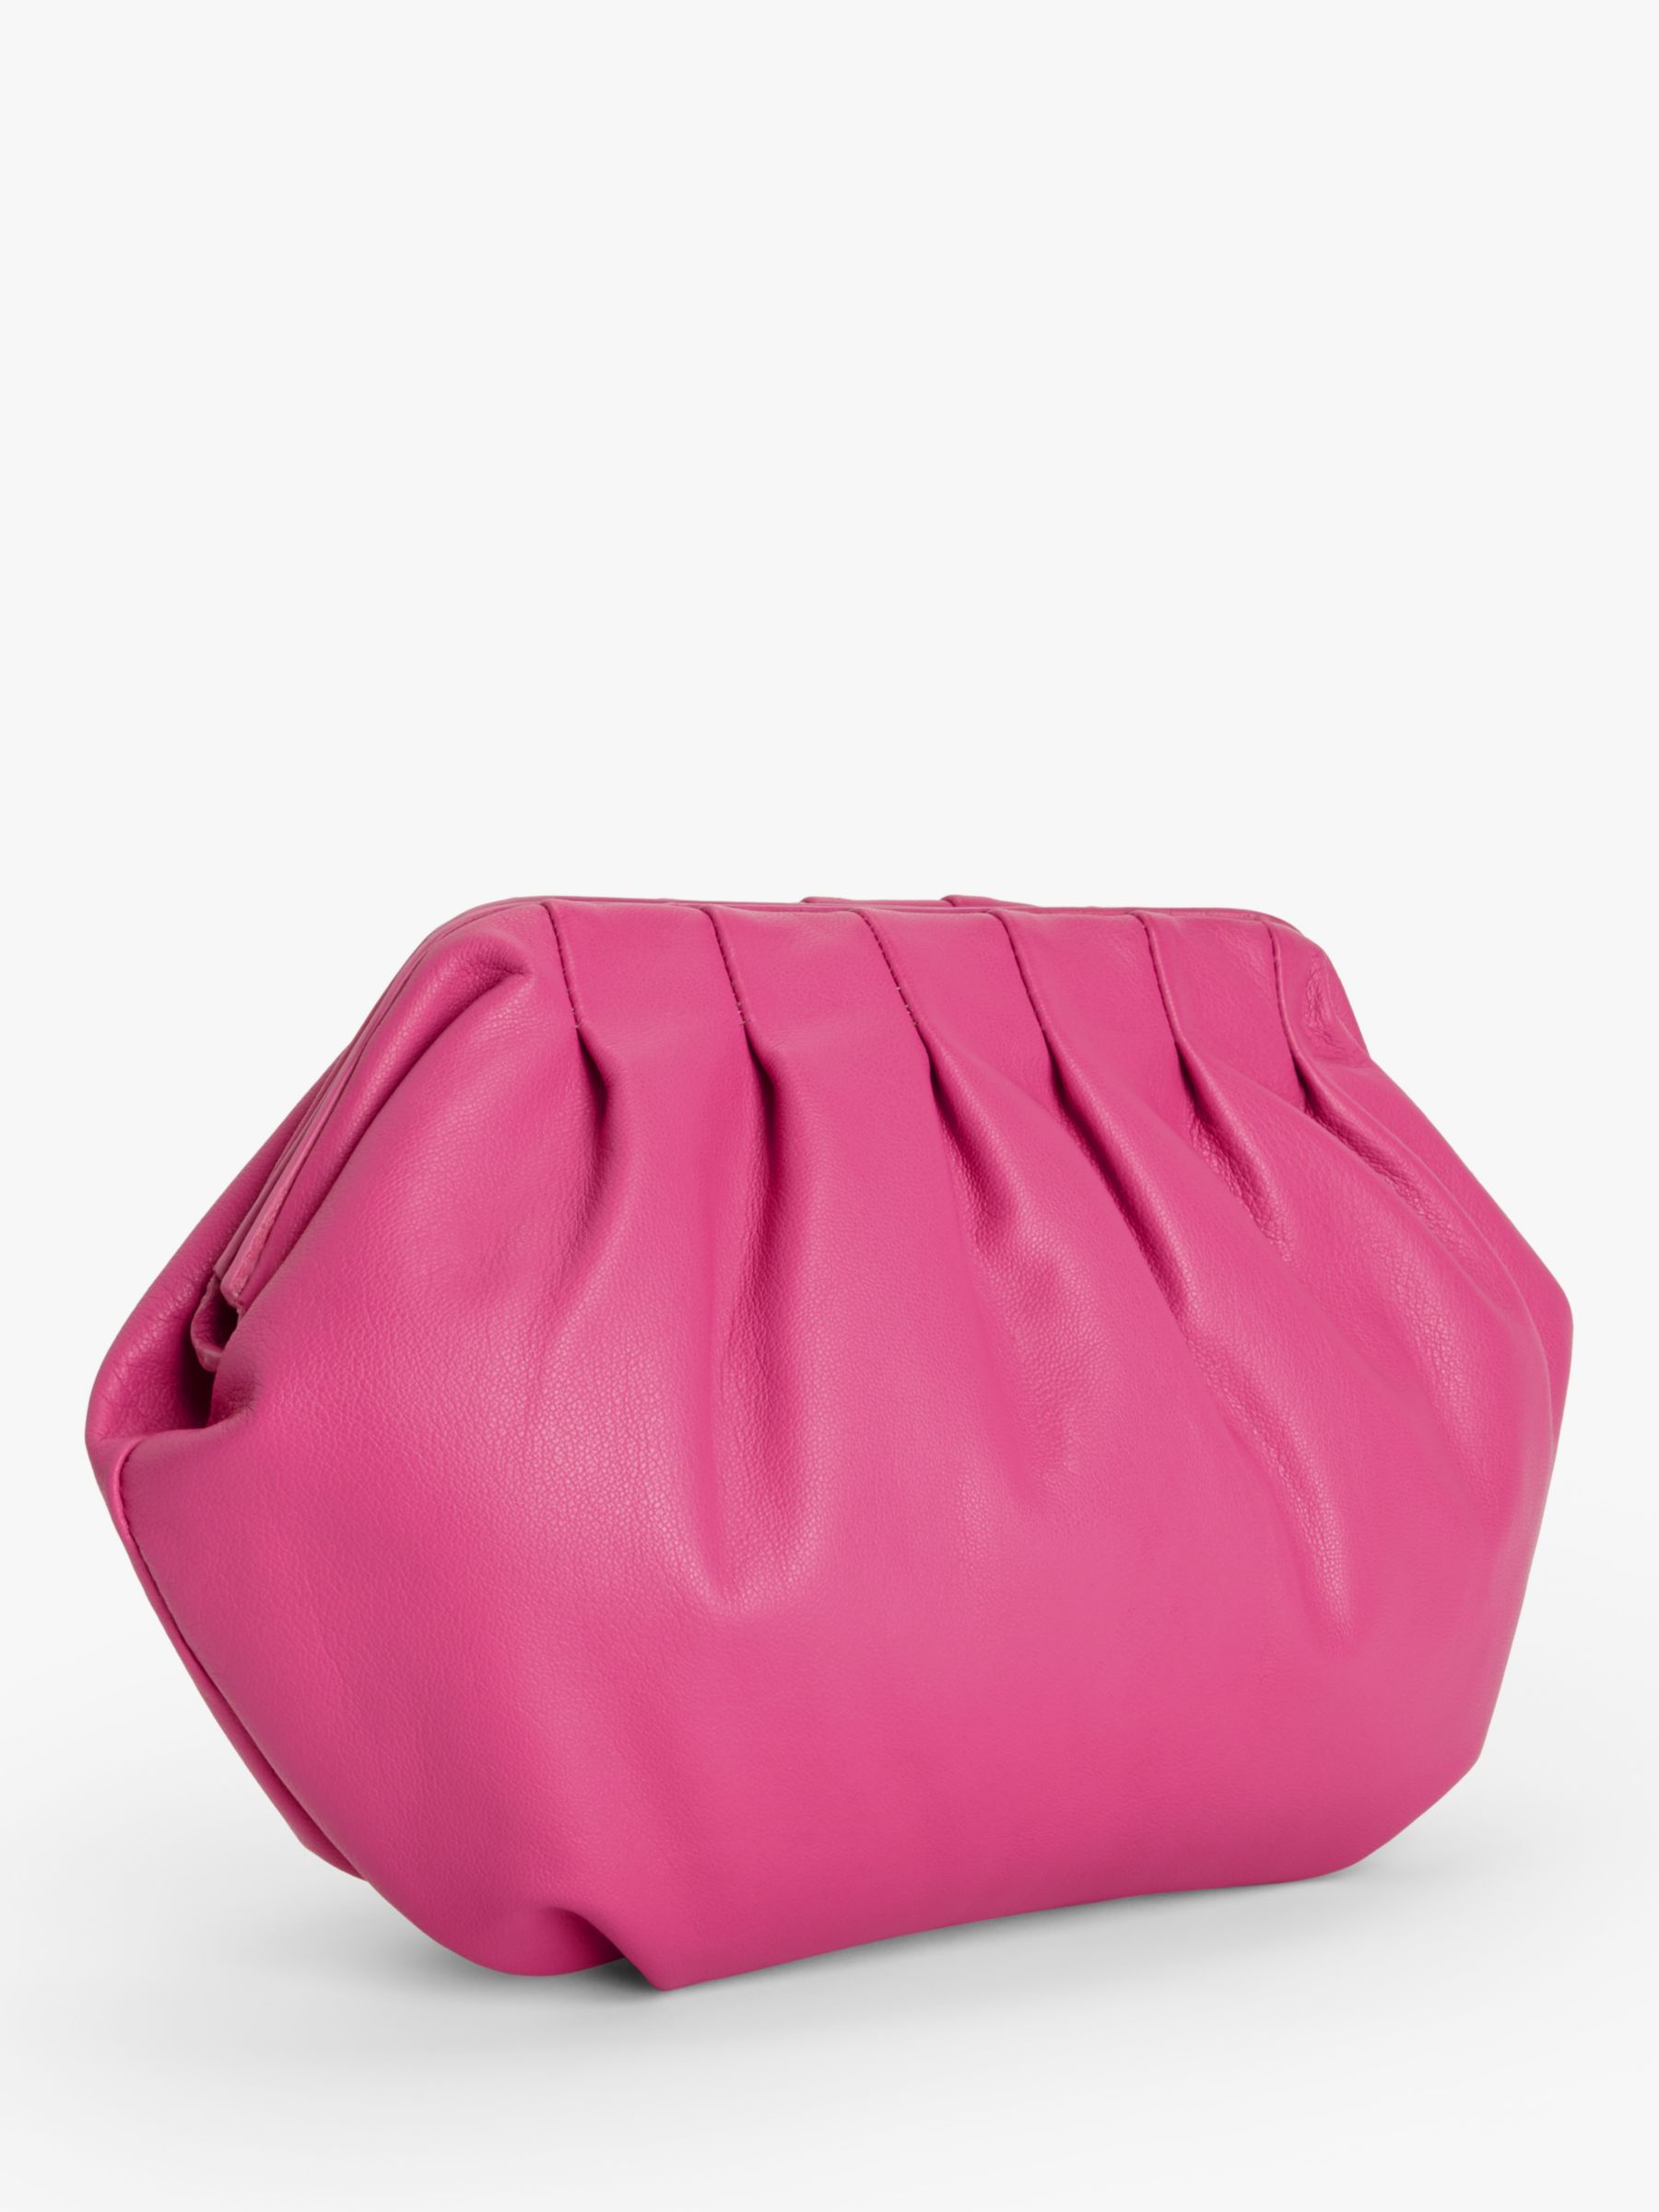 John Lewis Cloud Leather Clutch Bag, Fuchsia Pink